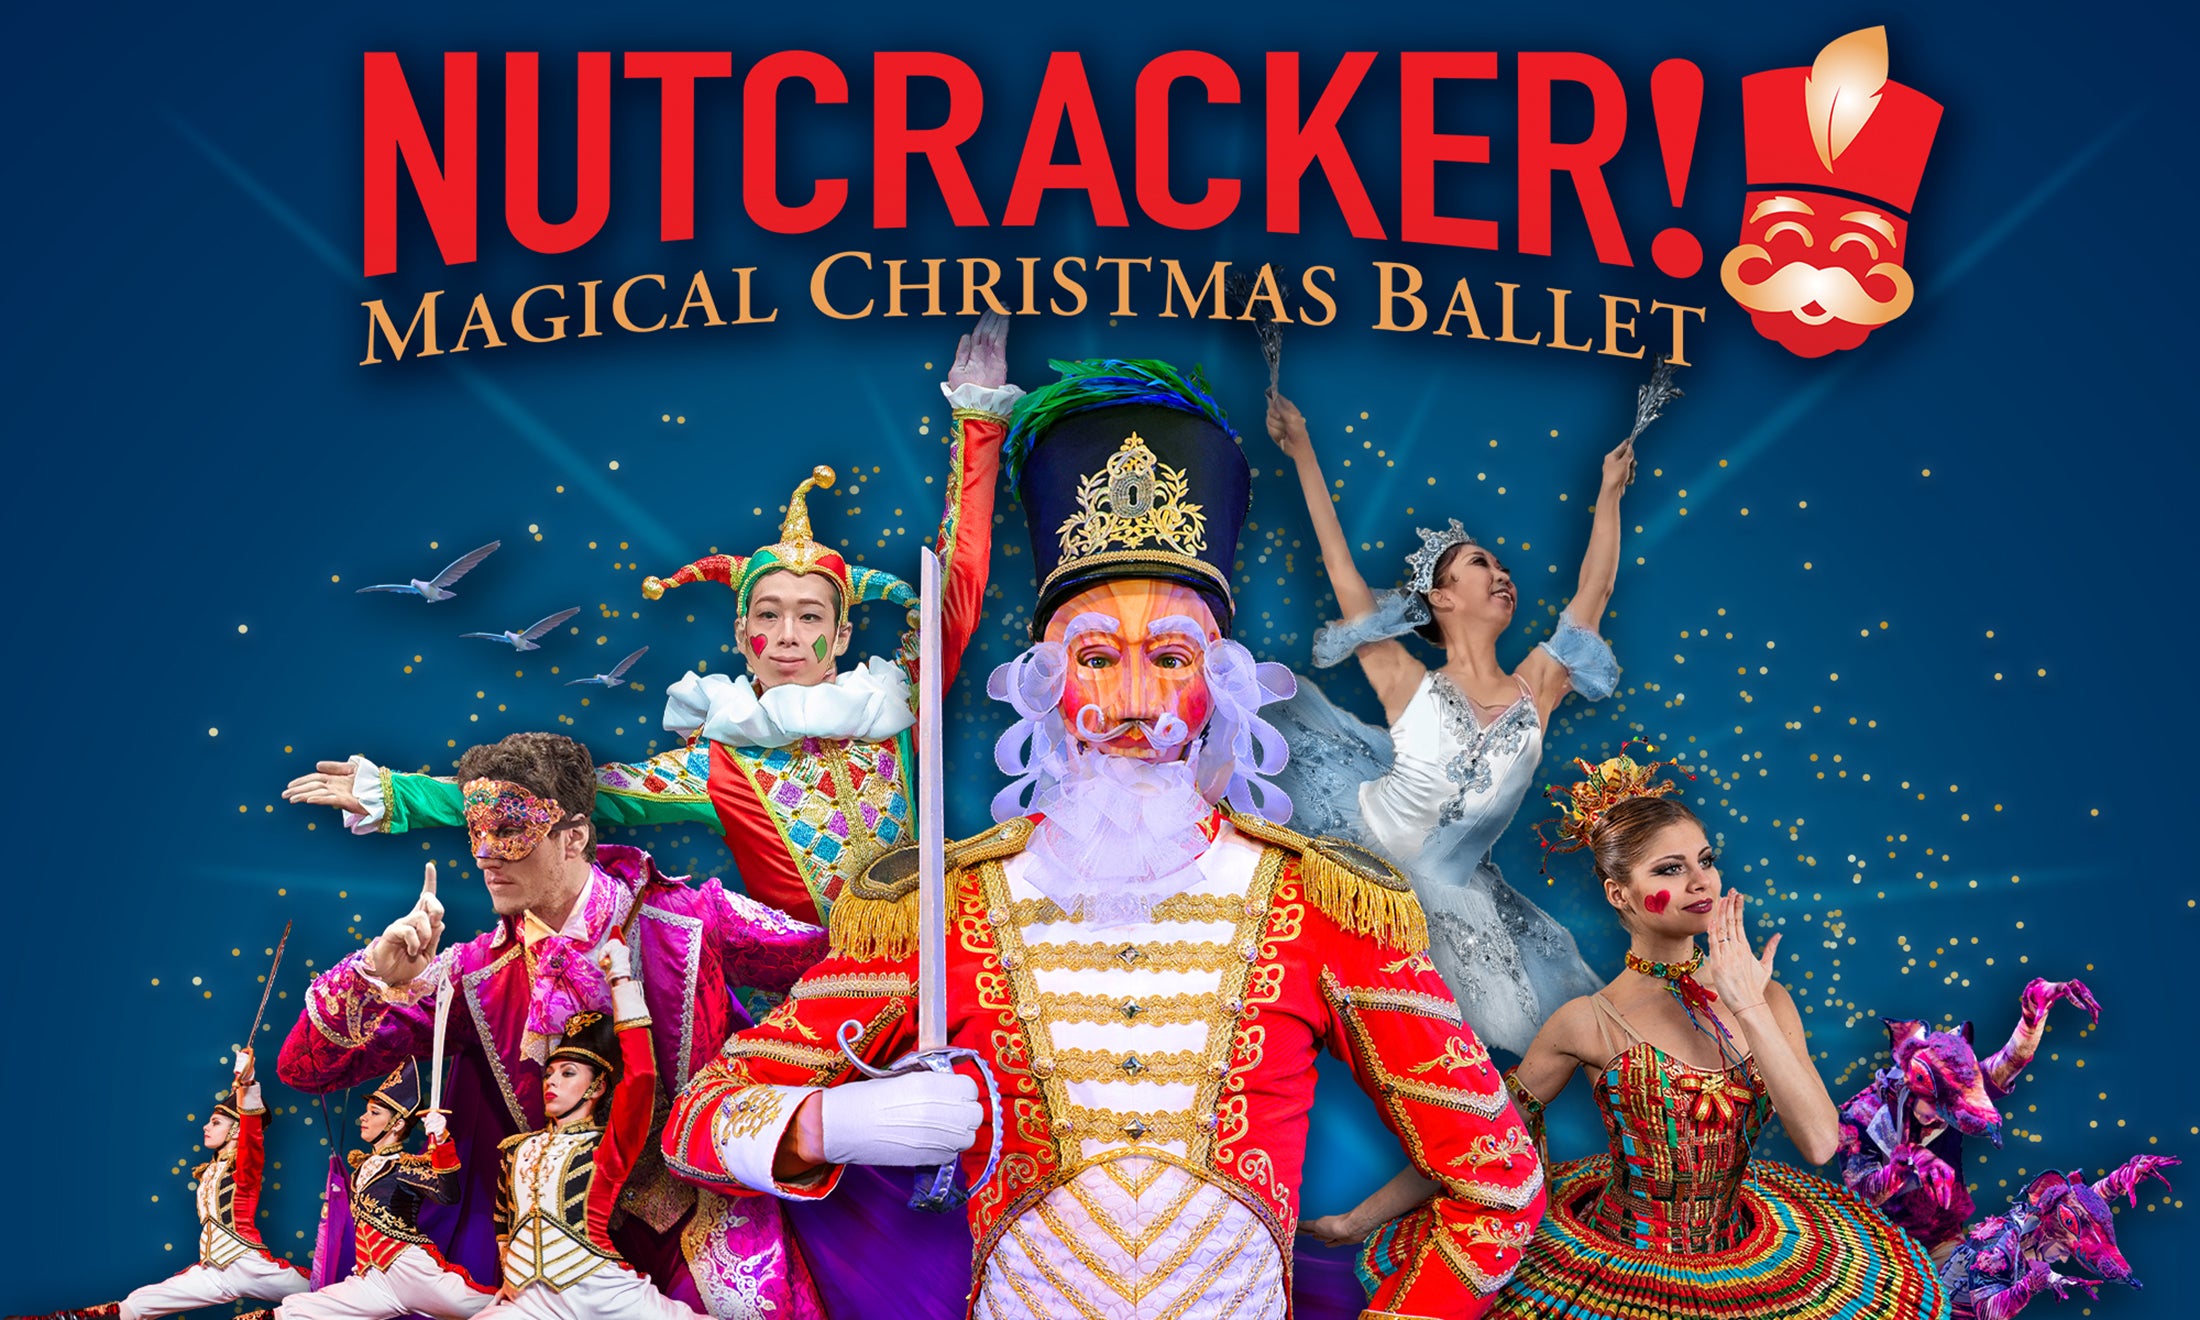 NUTCRACKER! Magical Christmas Ballet at Visalia Fox Theatre - Visalia, CA 93291